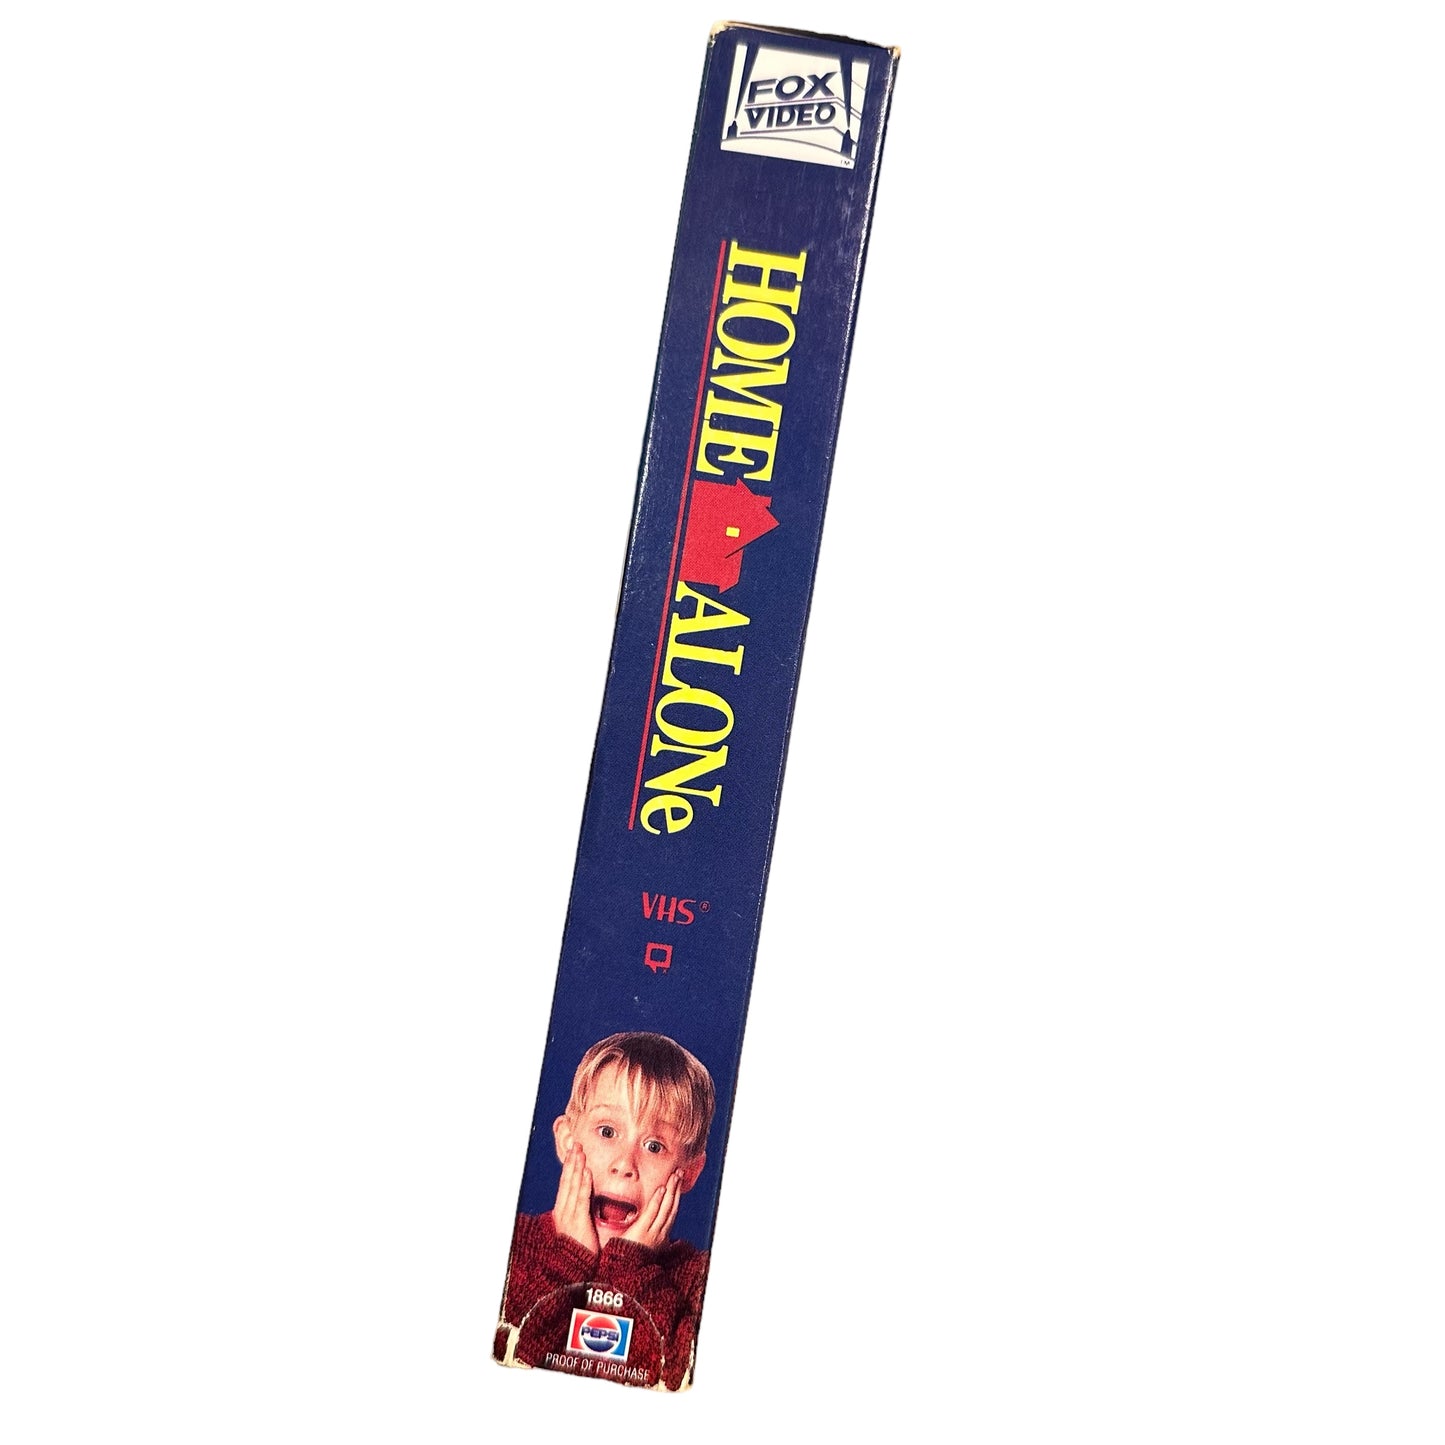 VHS ビデオテープ 輸入版 ホーム・アローン Home Alone 海外版 USA アメリカ ヴィンテージ ビデオ 紙ジャケ